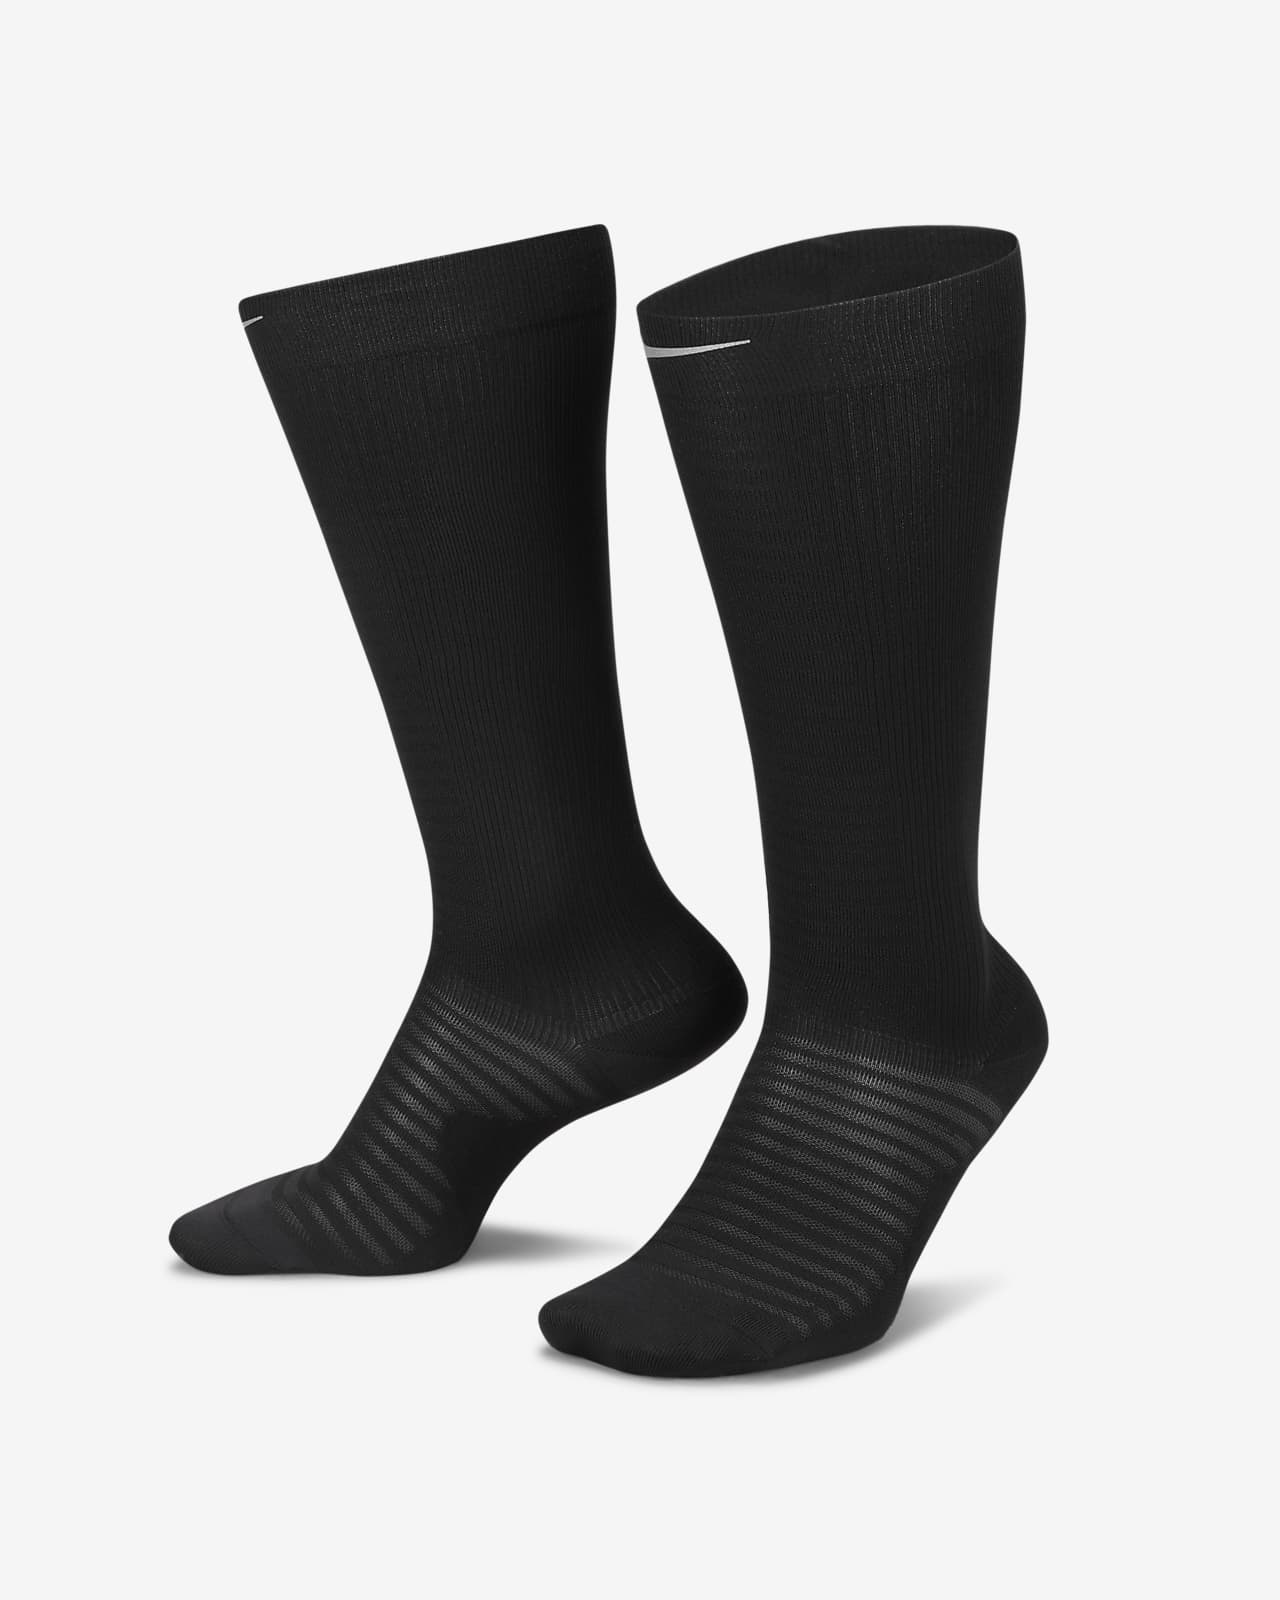 Nike Elite Compression Over-The-Calf Socks Green